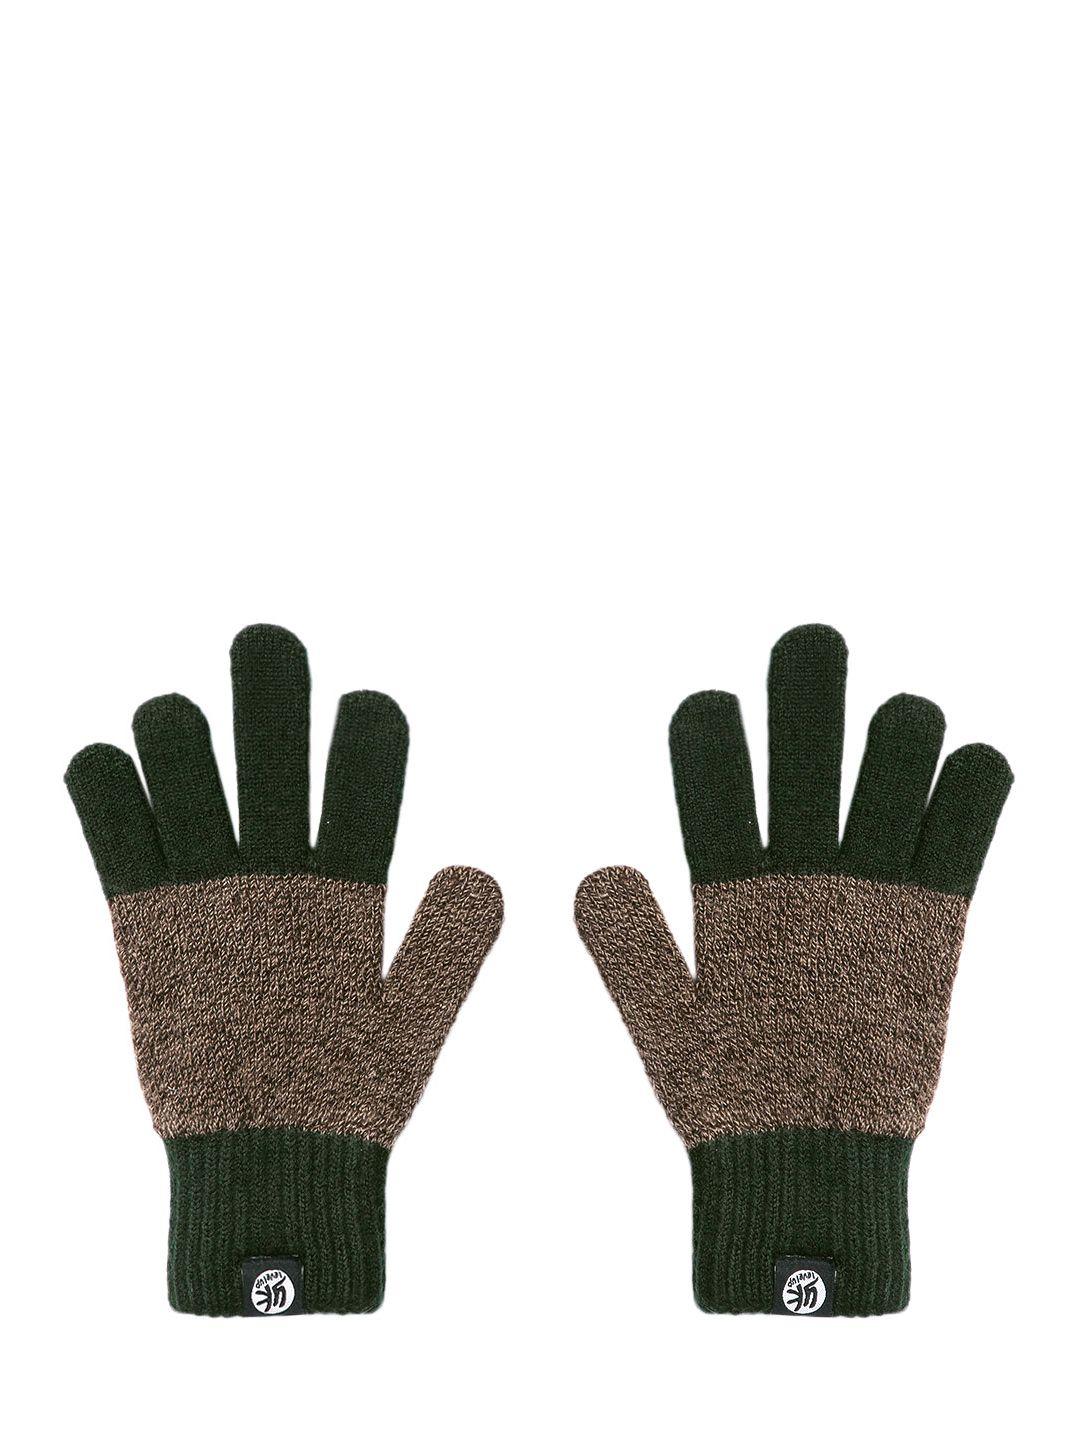 yk kids brown & olive green colourblocked hand gloves